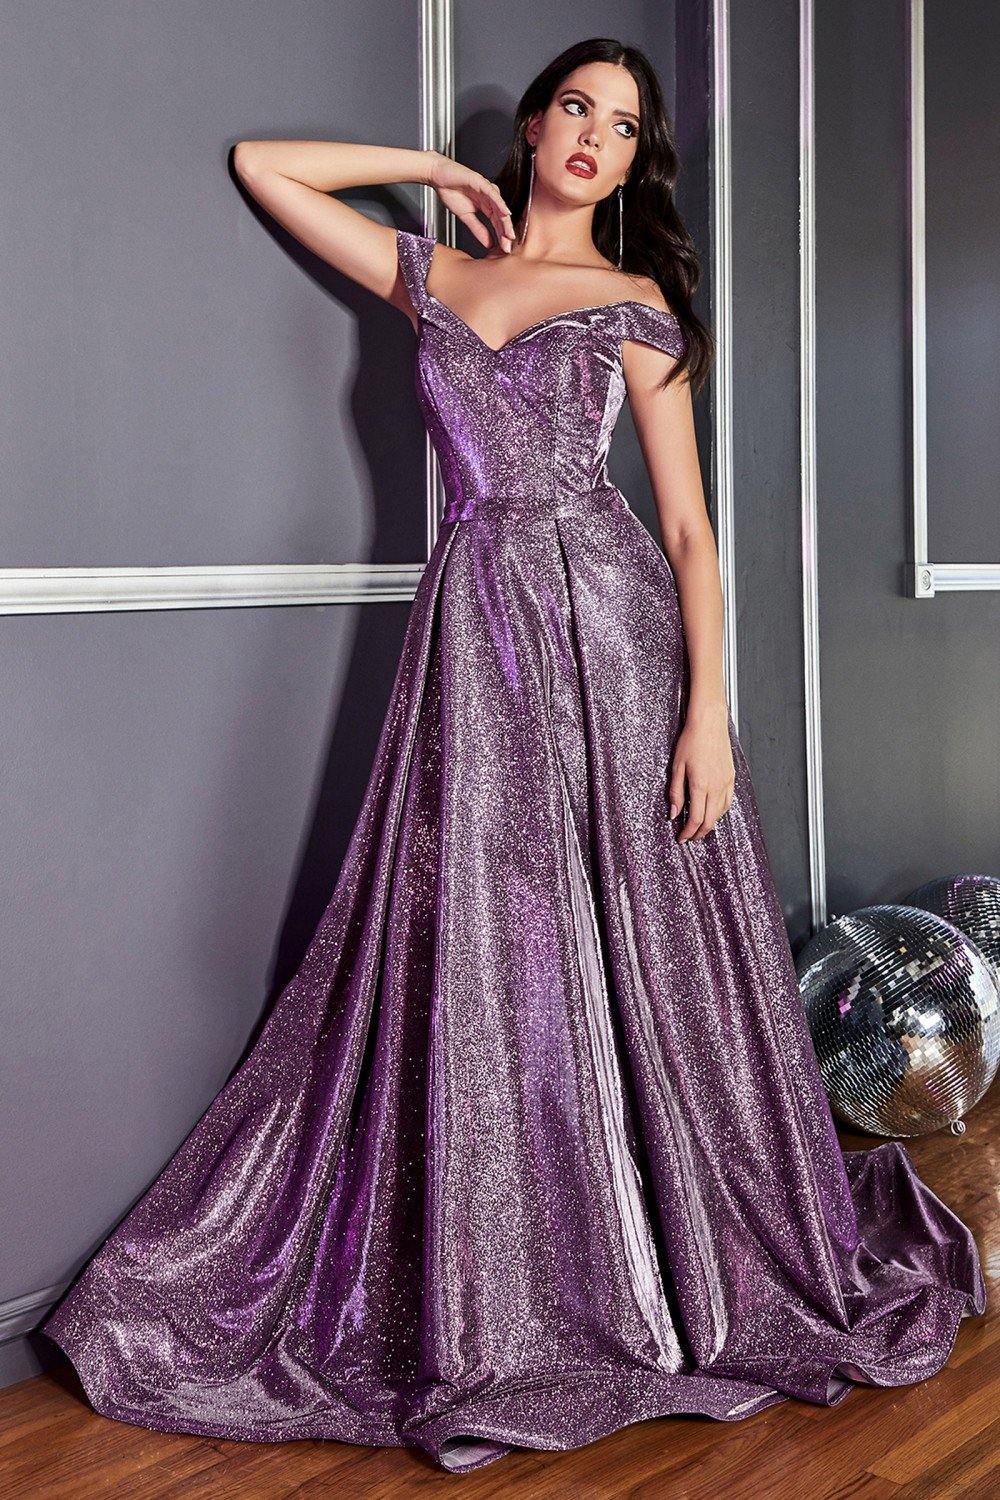 French Novelty: Alyce Paris 61472 Off Shoulder Metallic Prom Dress